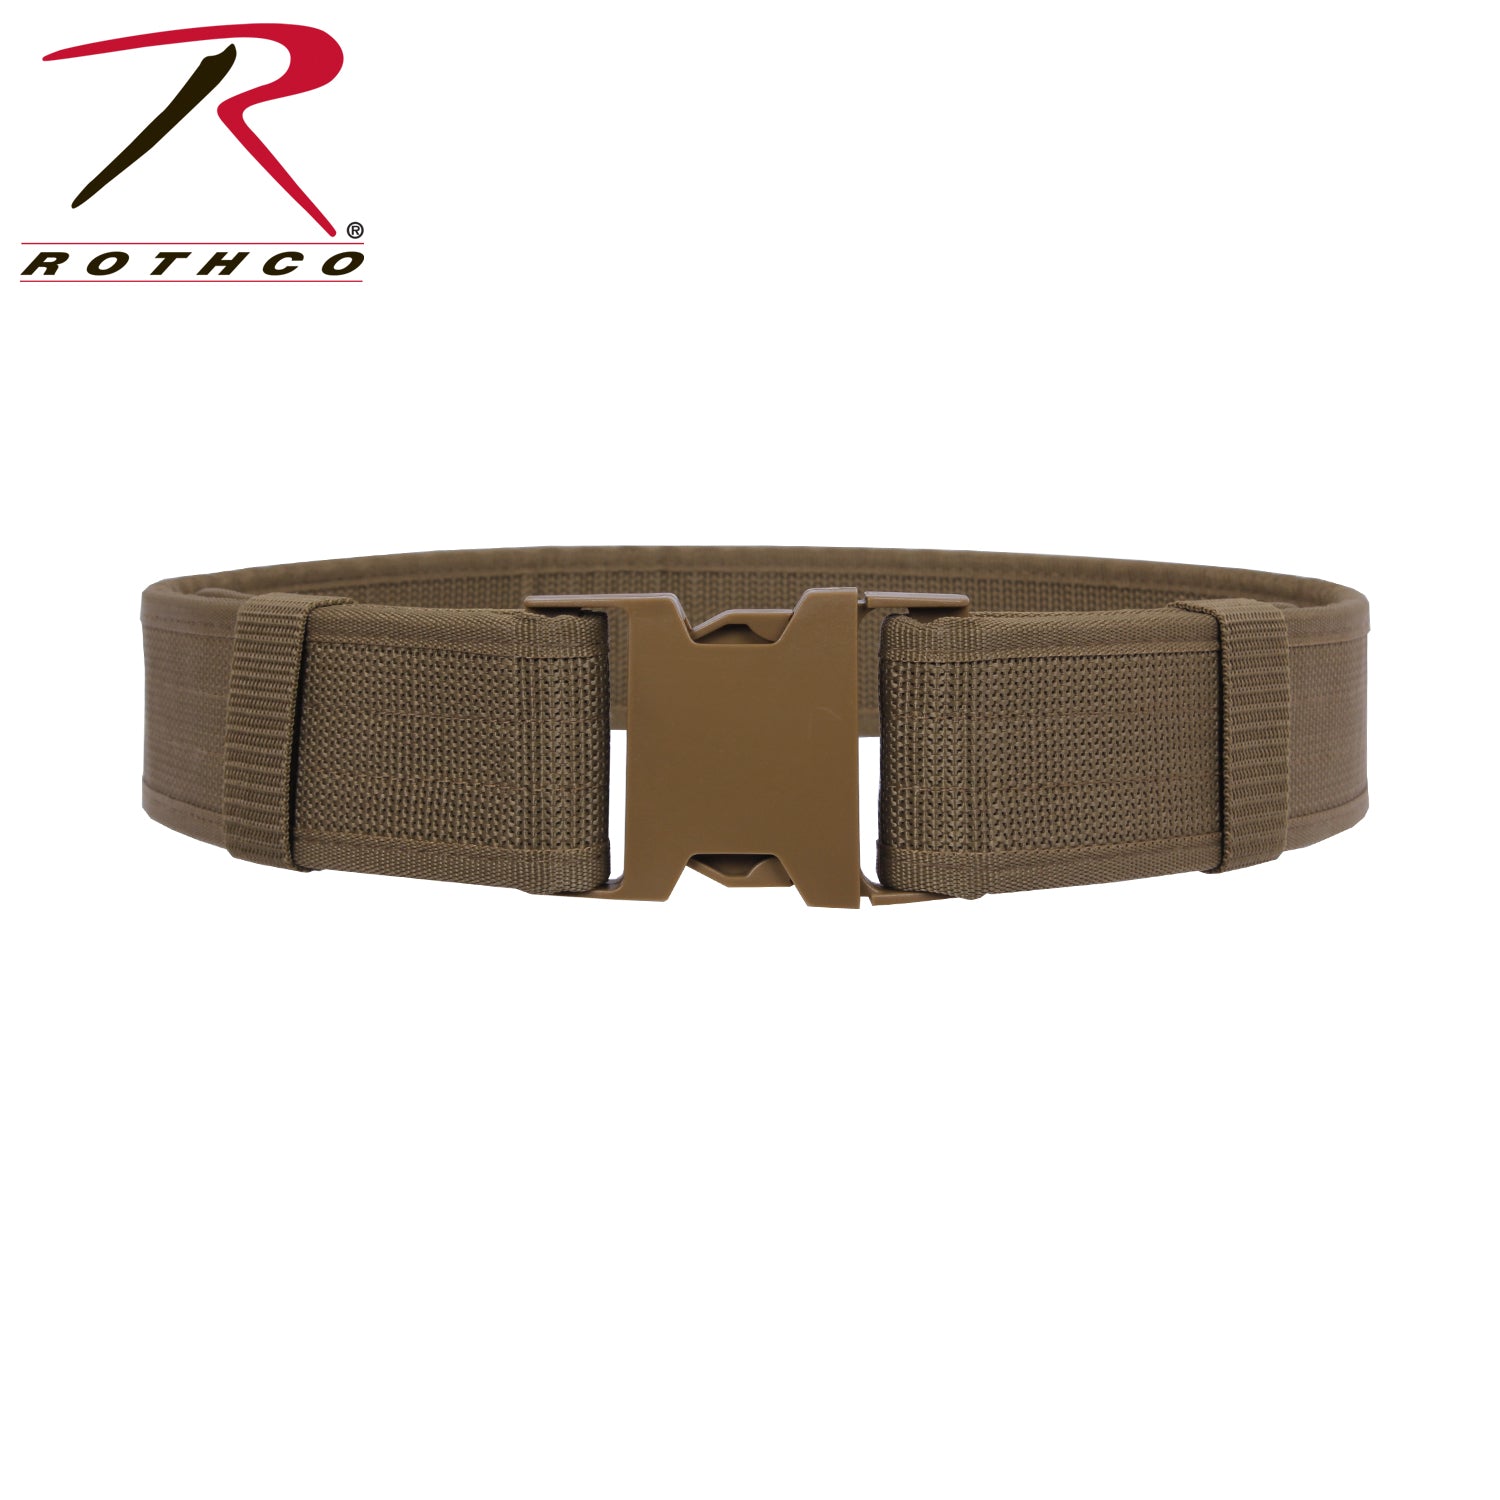 Rothco Duty Belt - Tactical Choice Plus